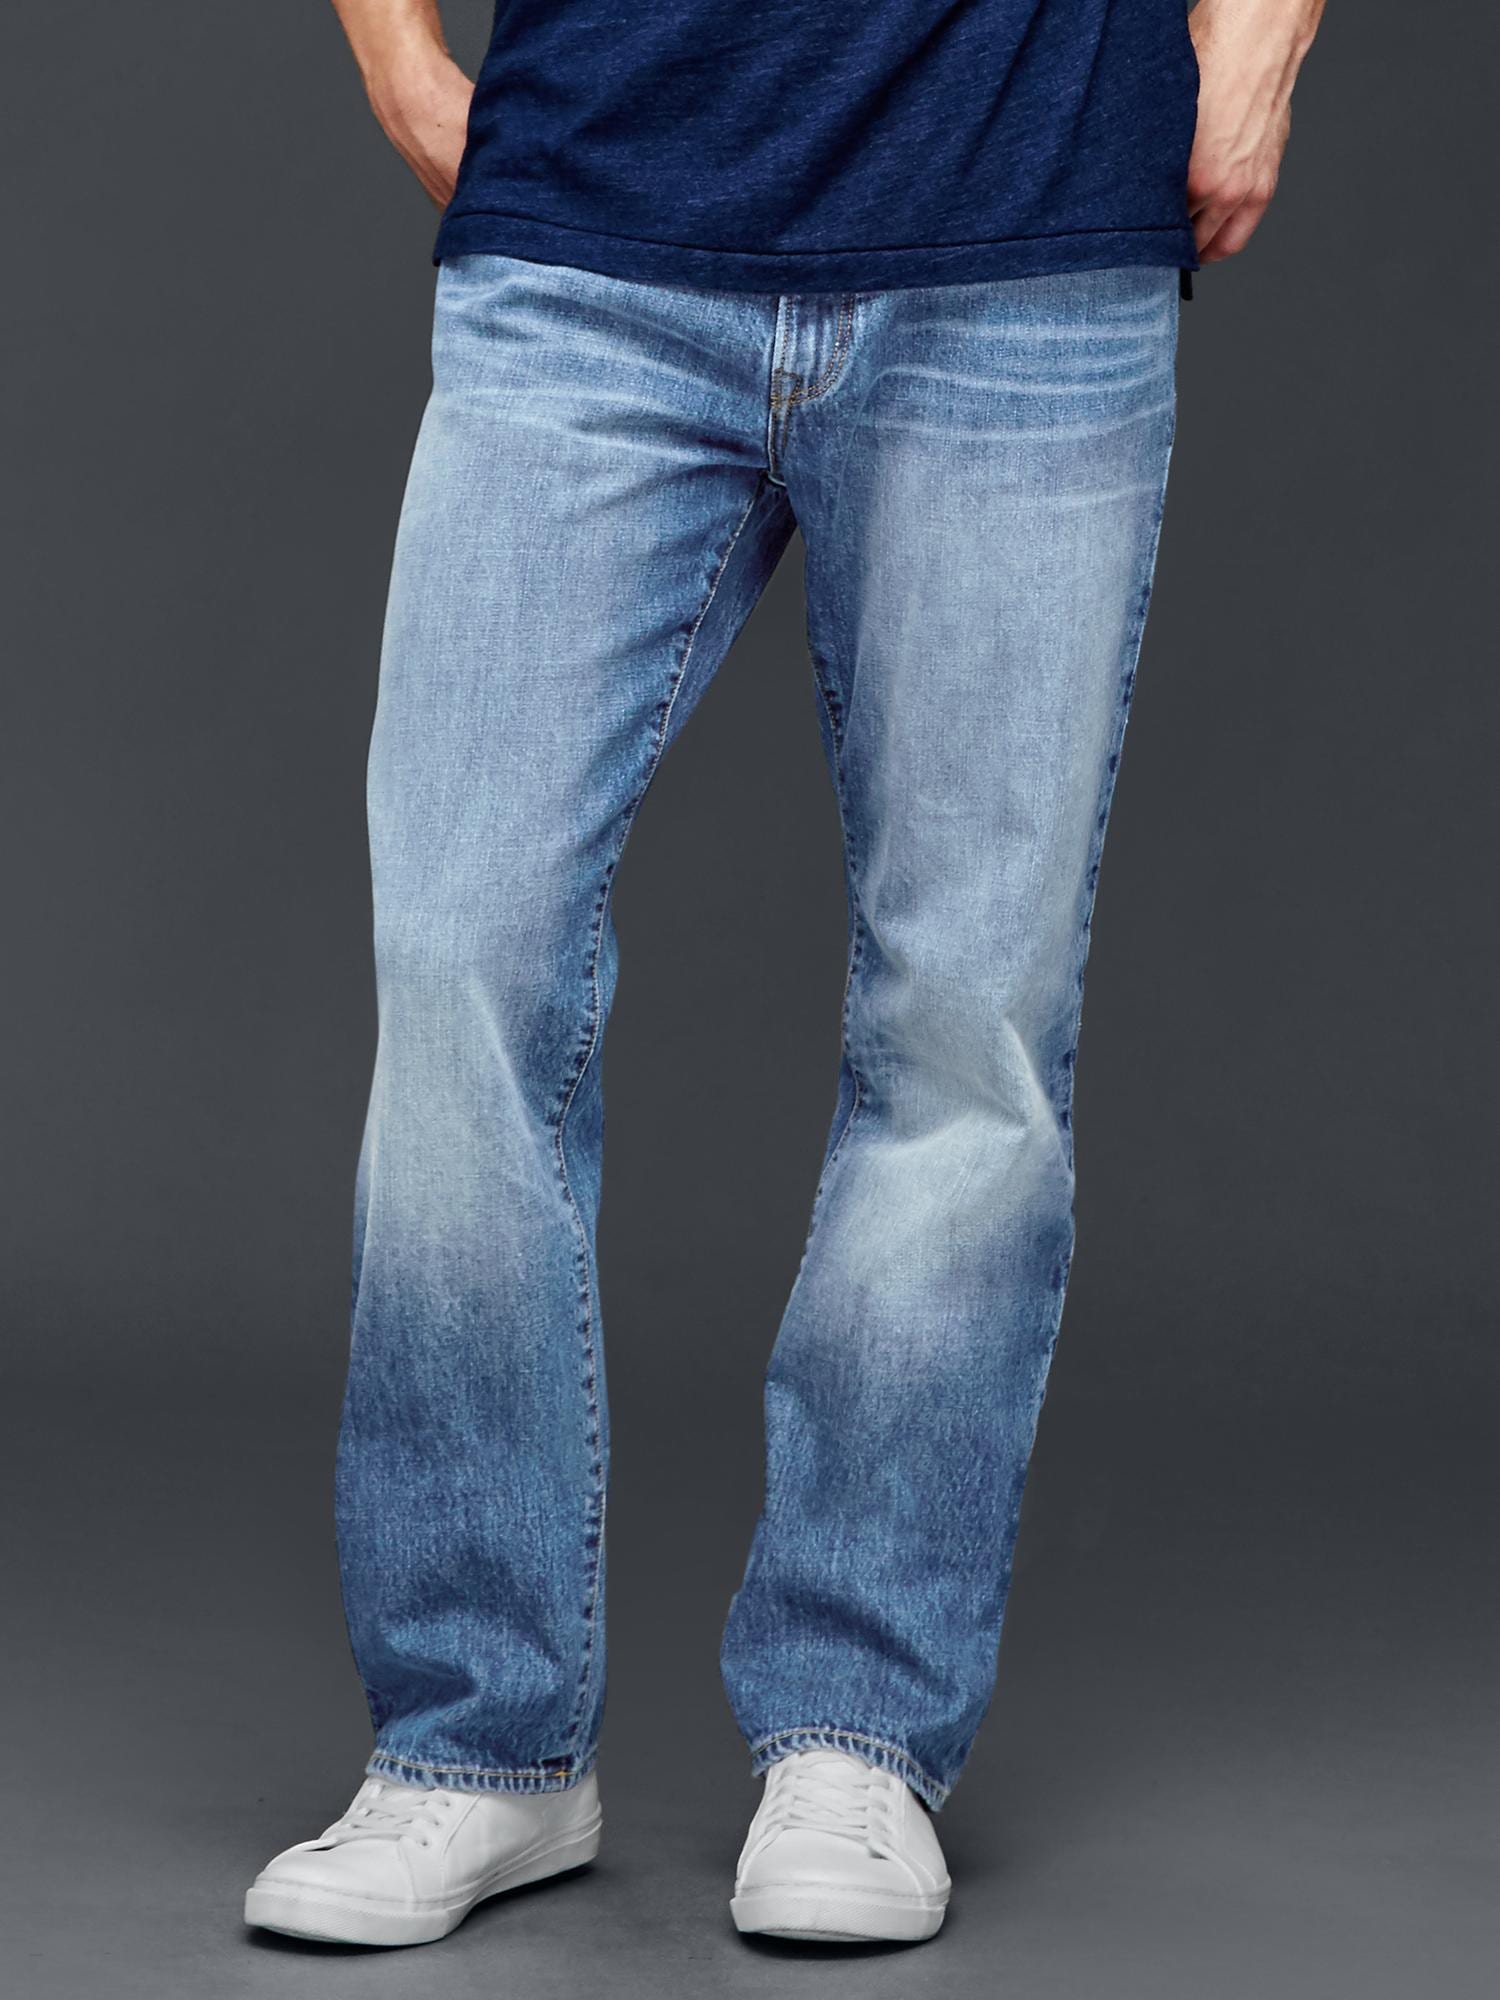 gap 1969 straight jeans mens